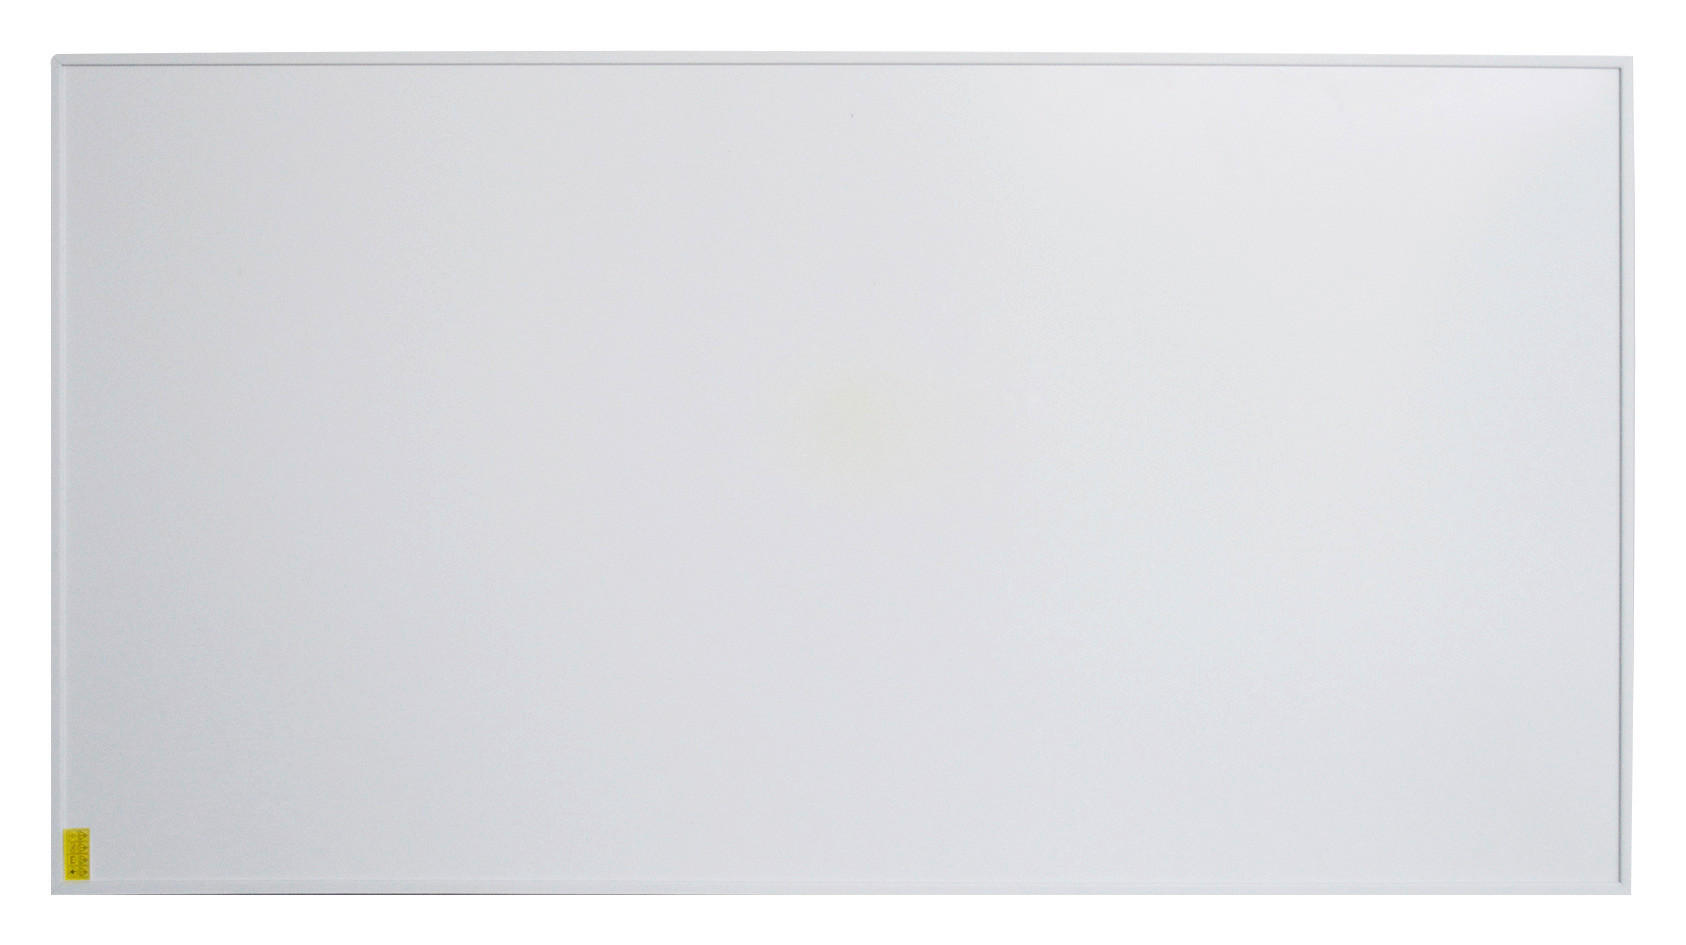 INFRAROT-HEIZPANEEL 90/59,5/2,2 cm 580 W Ambiente  - Weiß, Trend, Kunststoff/Metall (90/59,5/2,2cm) - Atrigo